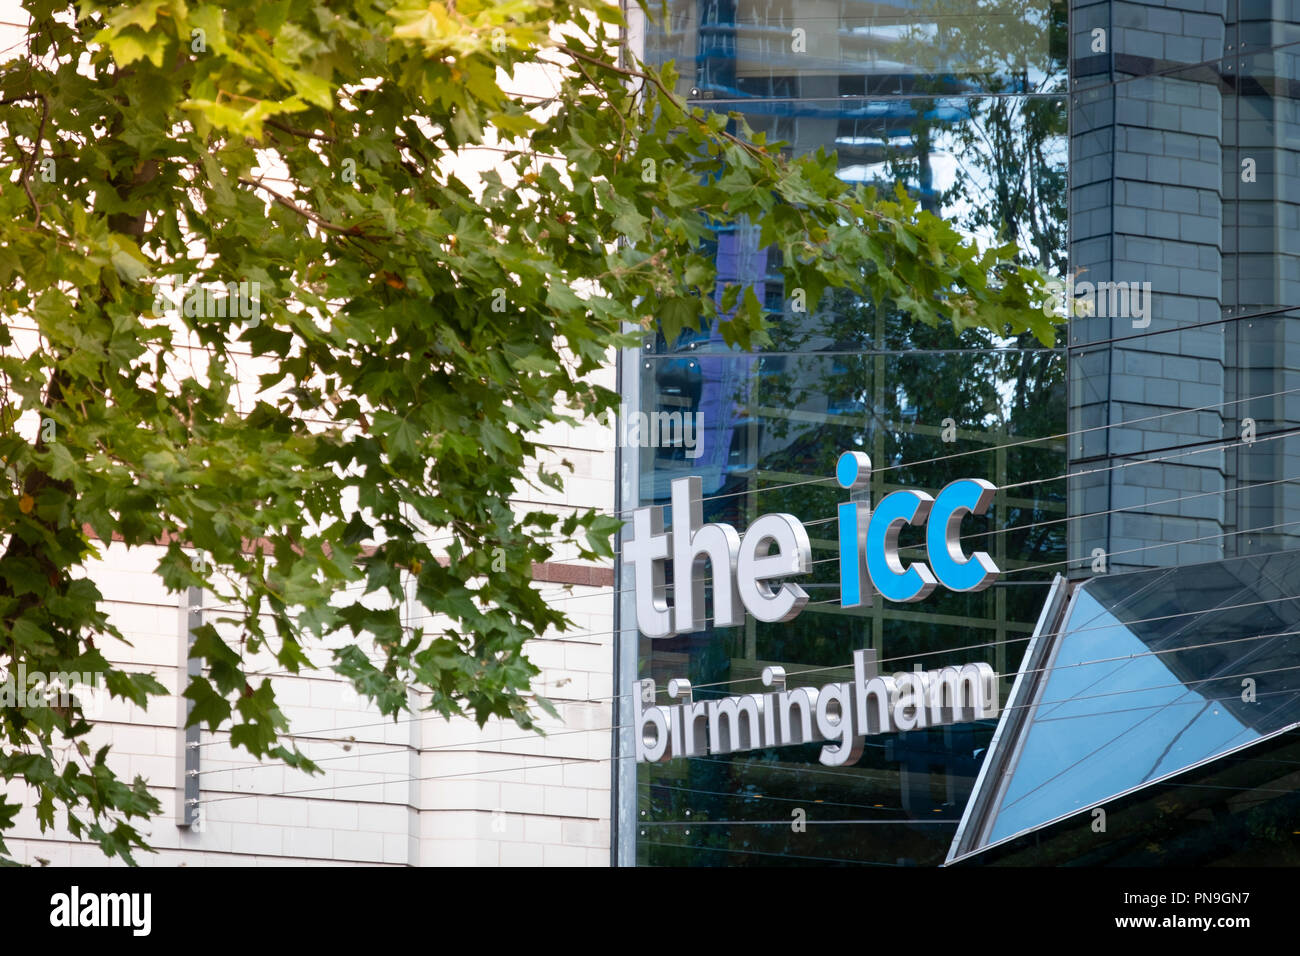 The ICC entrance Birmingham, England Stock Photo